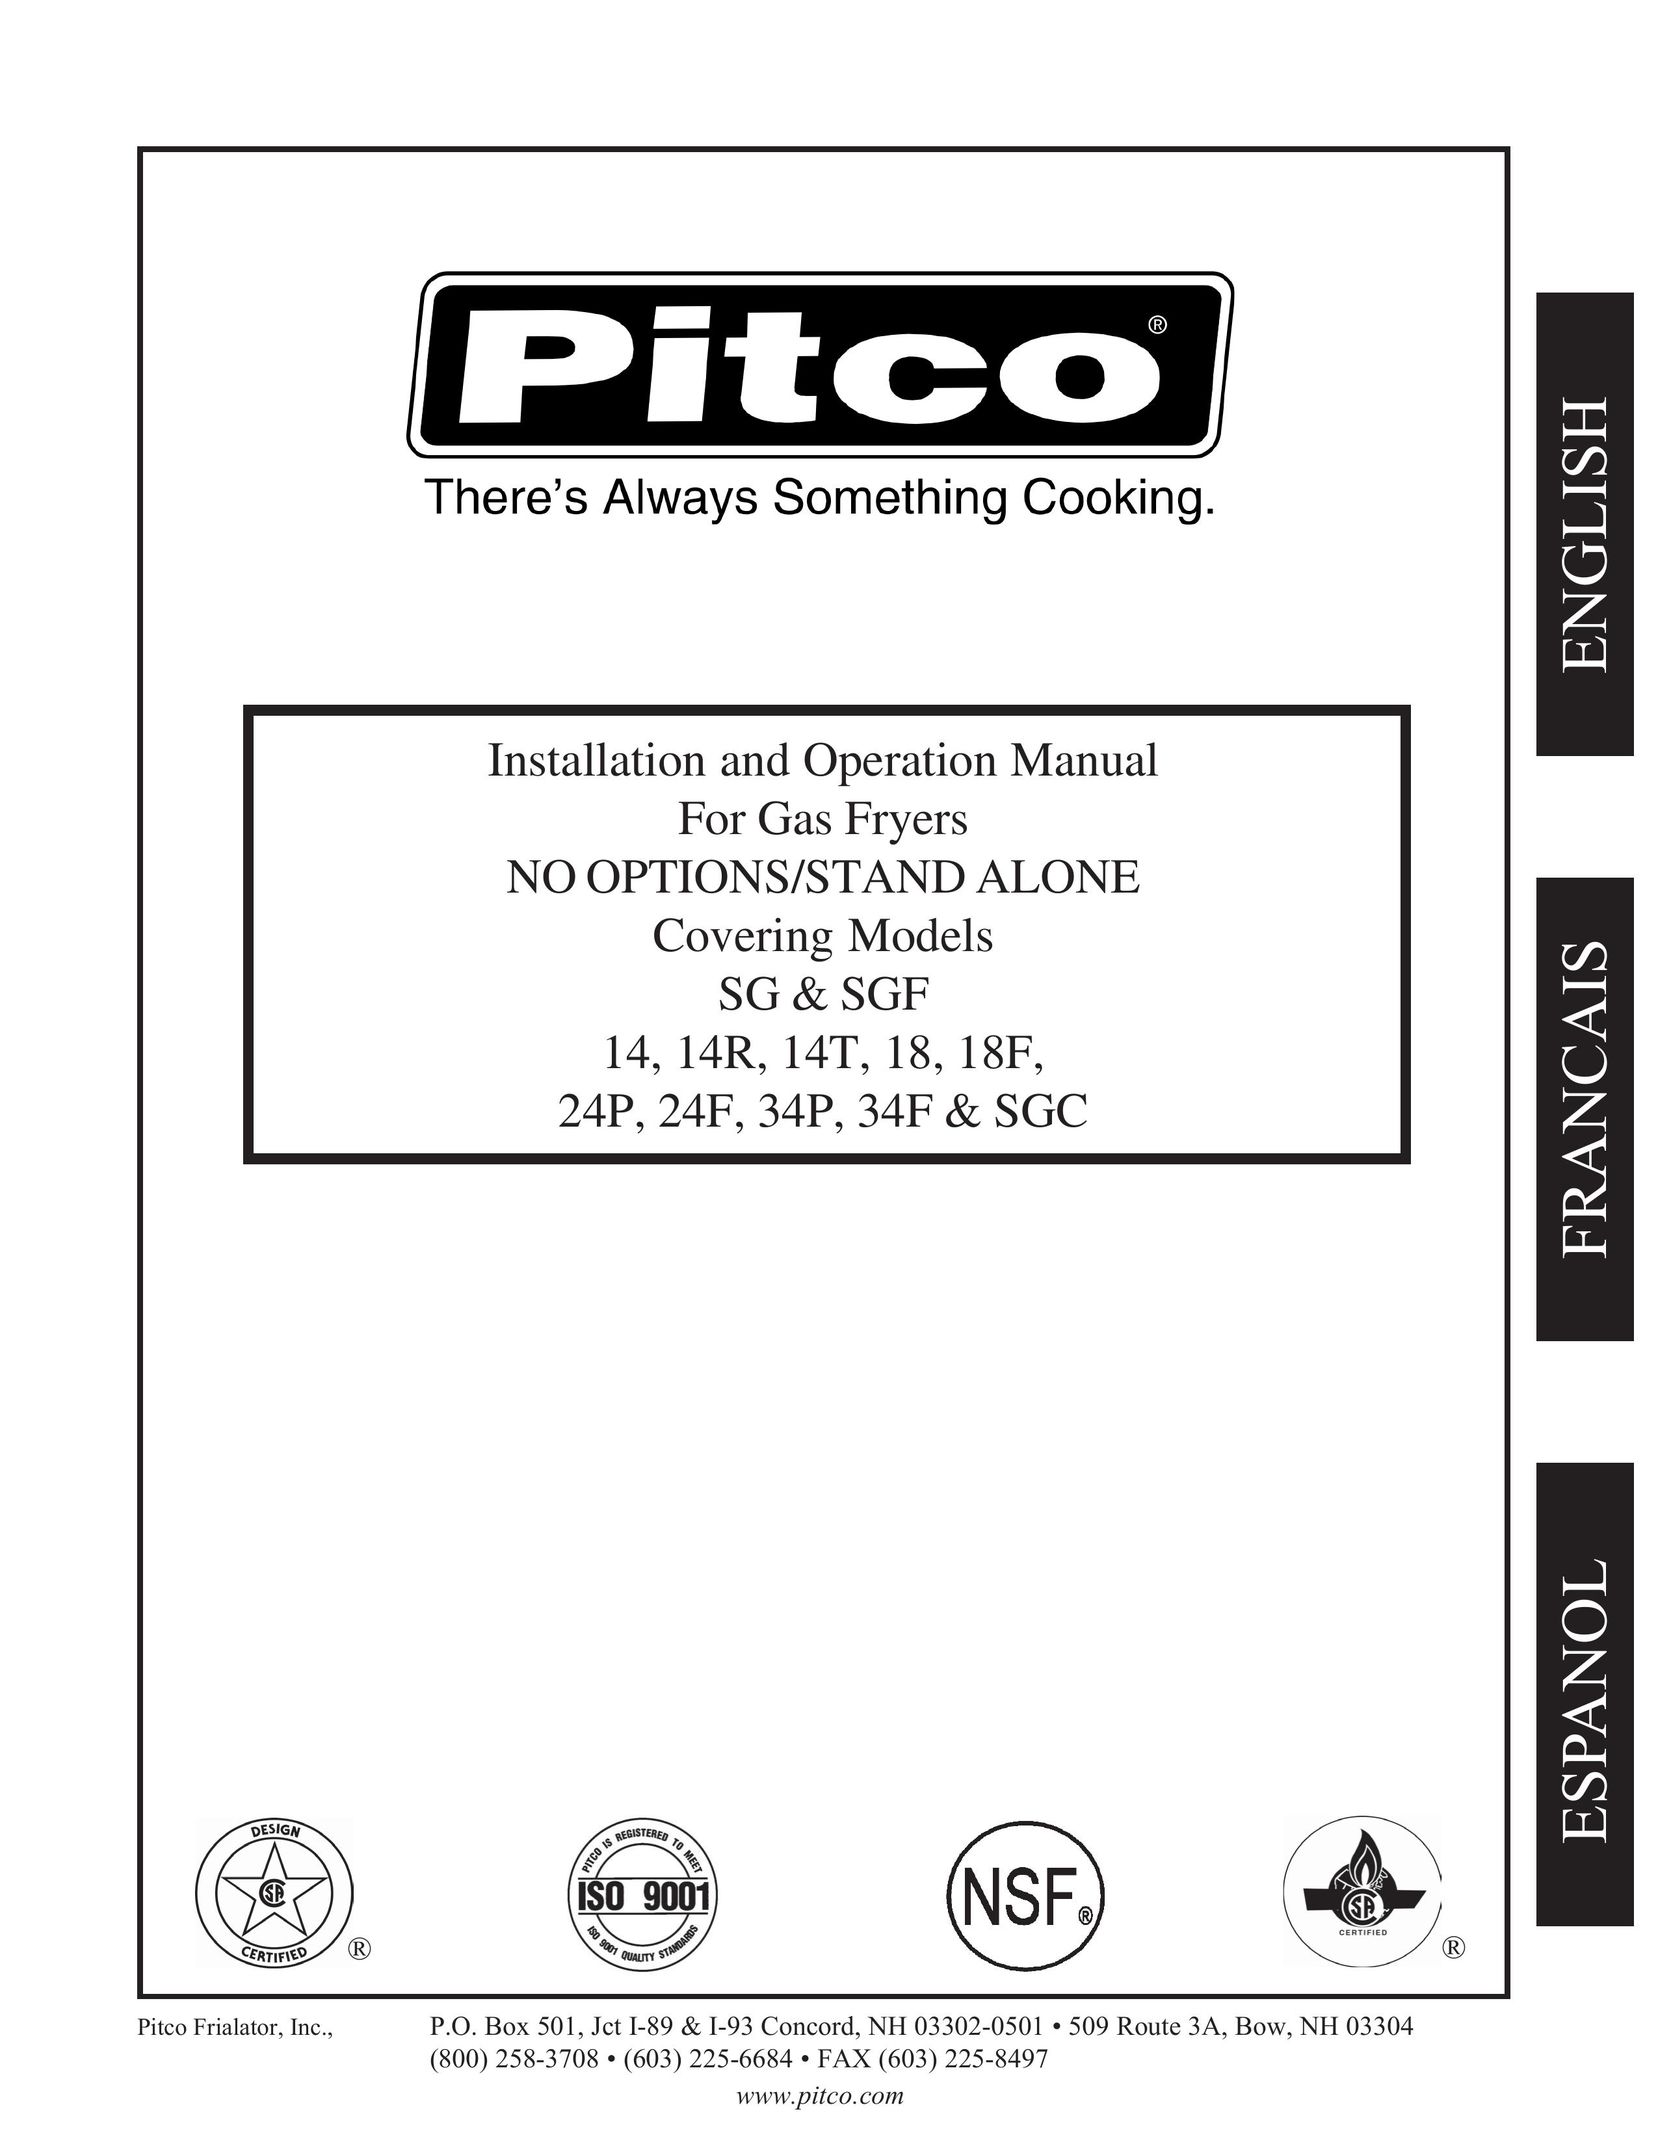 Pitco Frialator 24F Fryer User Manual